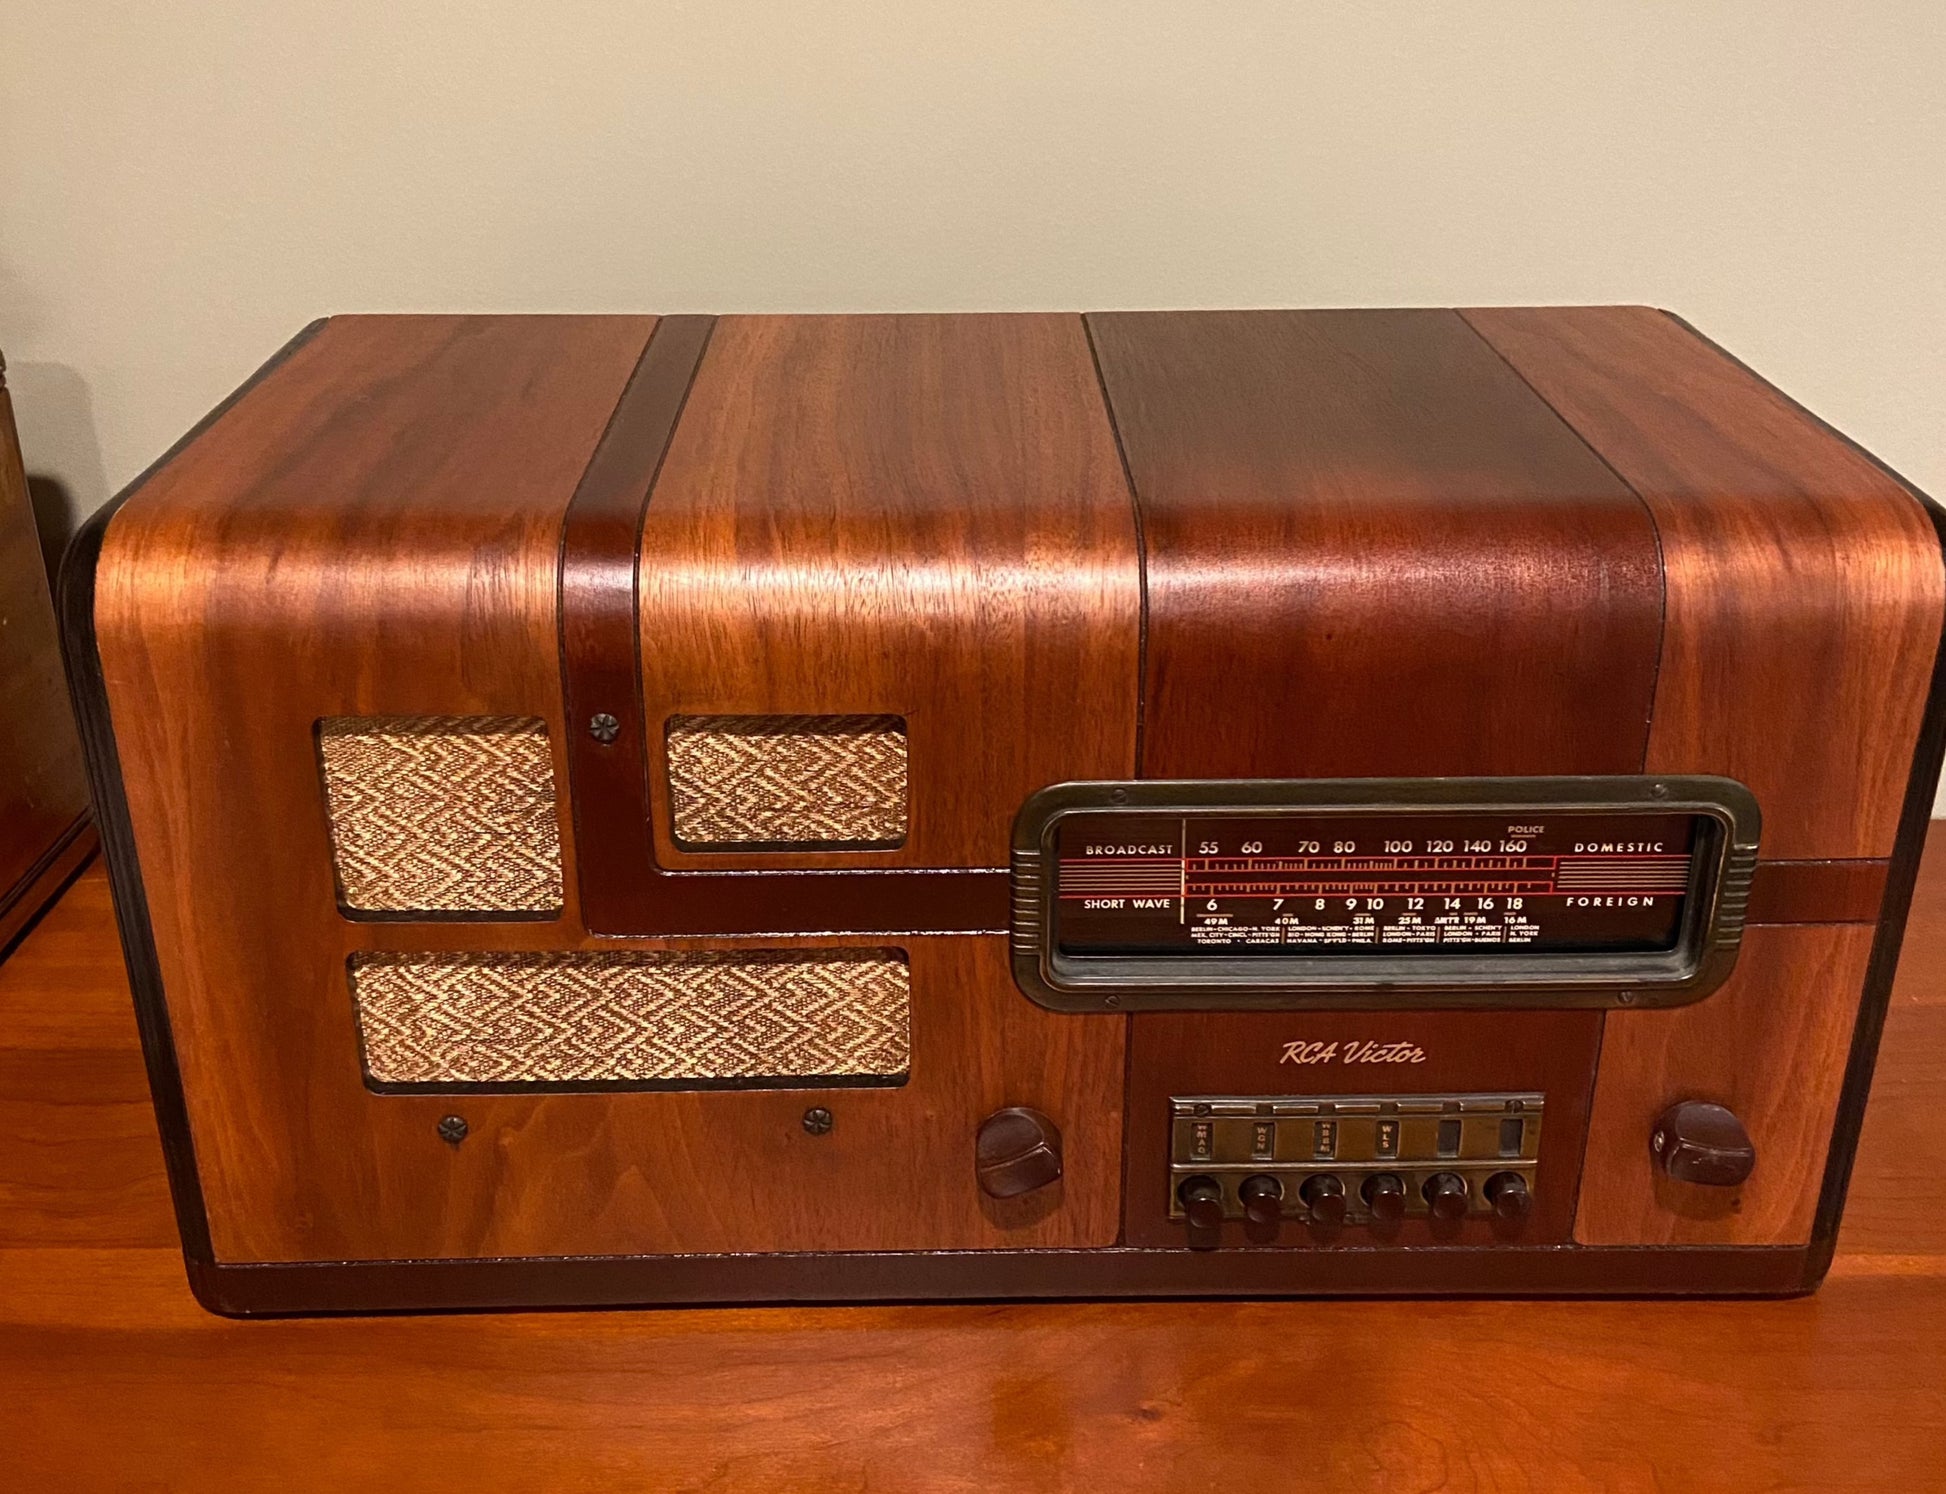 RCA Victor Radio (1938)